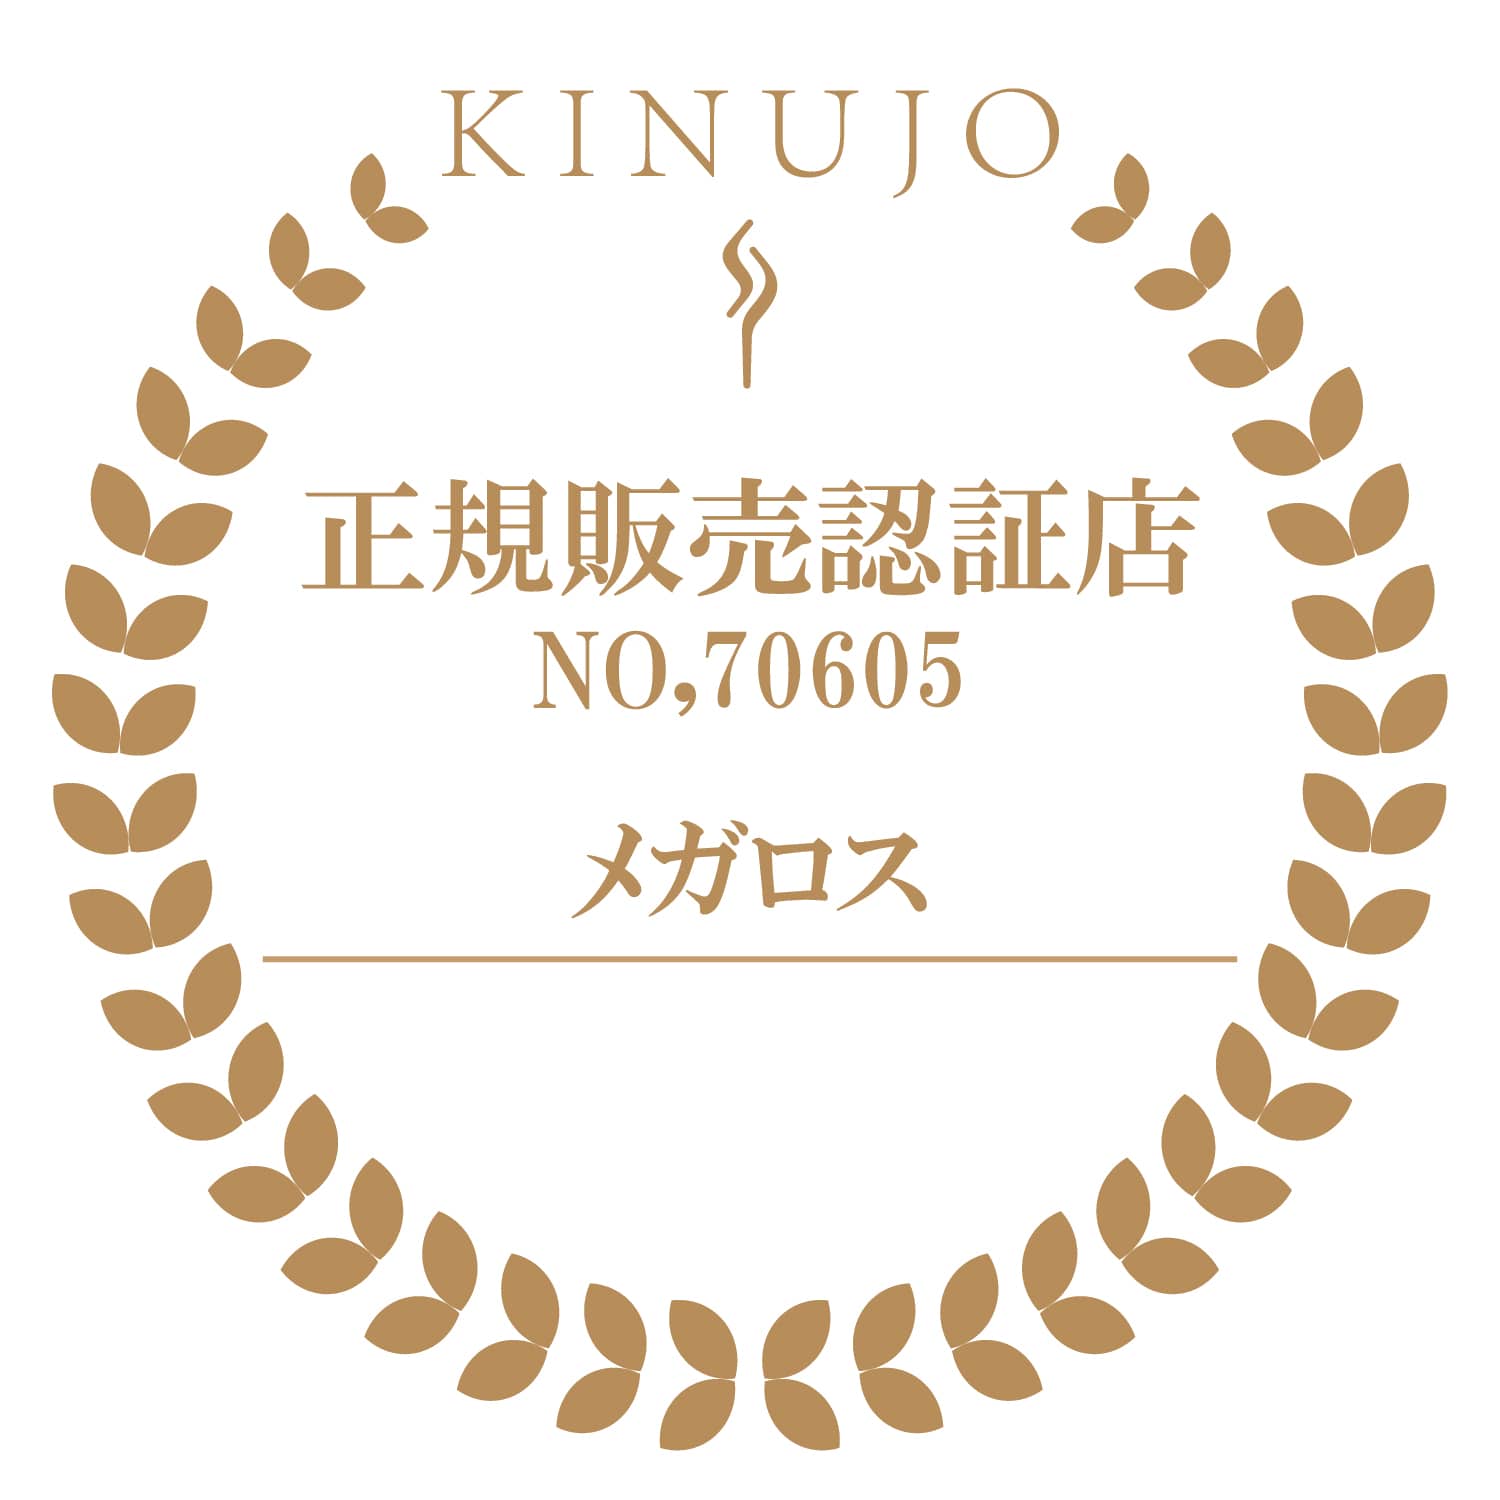 KINUJO Hair Dryer キヌージョ ヘアドライヤー モカ(モカ): メガロス